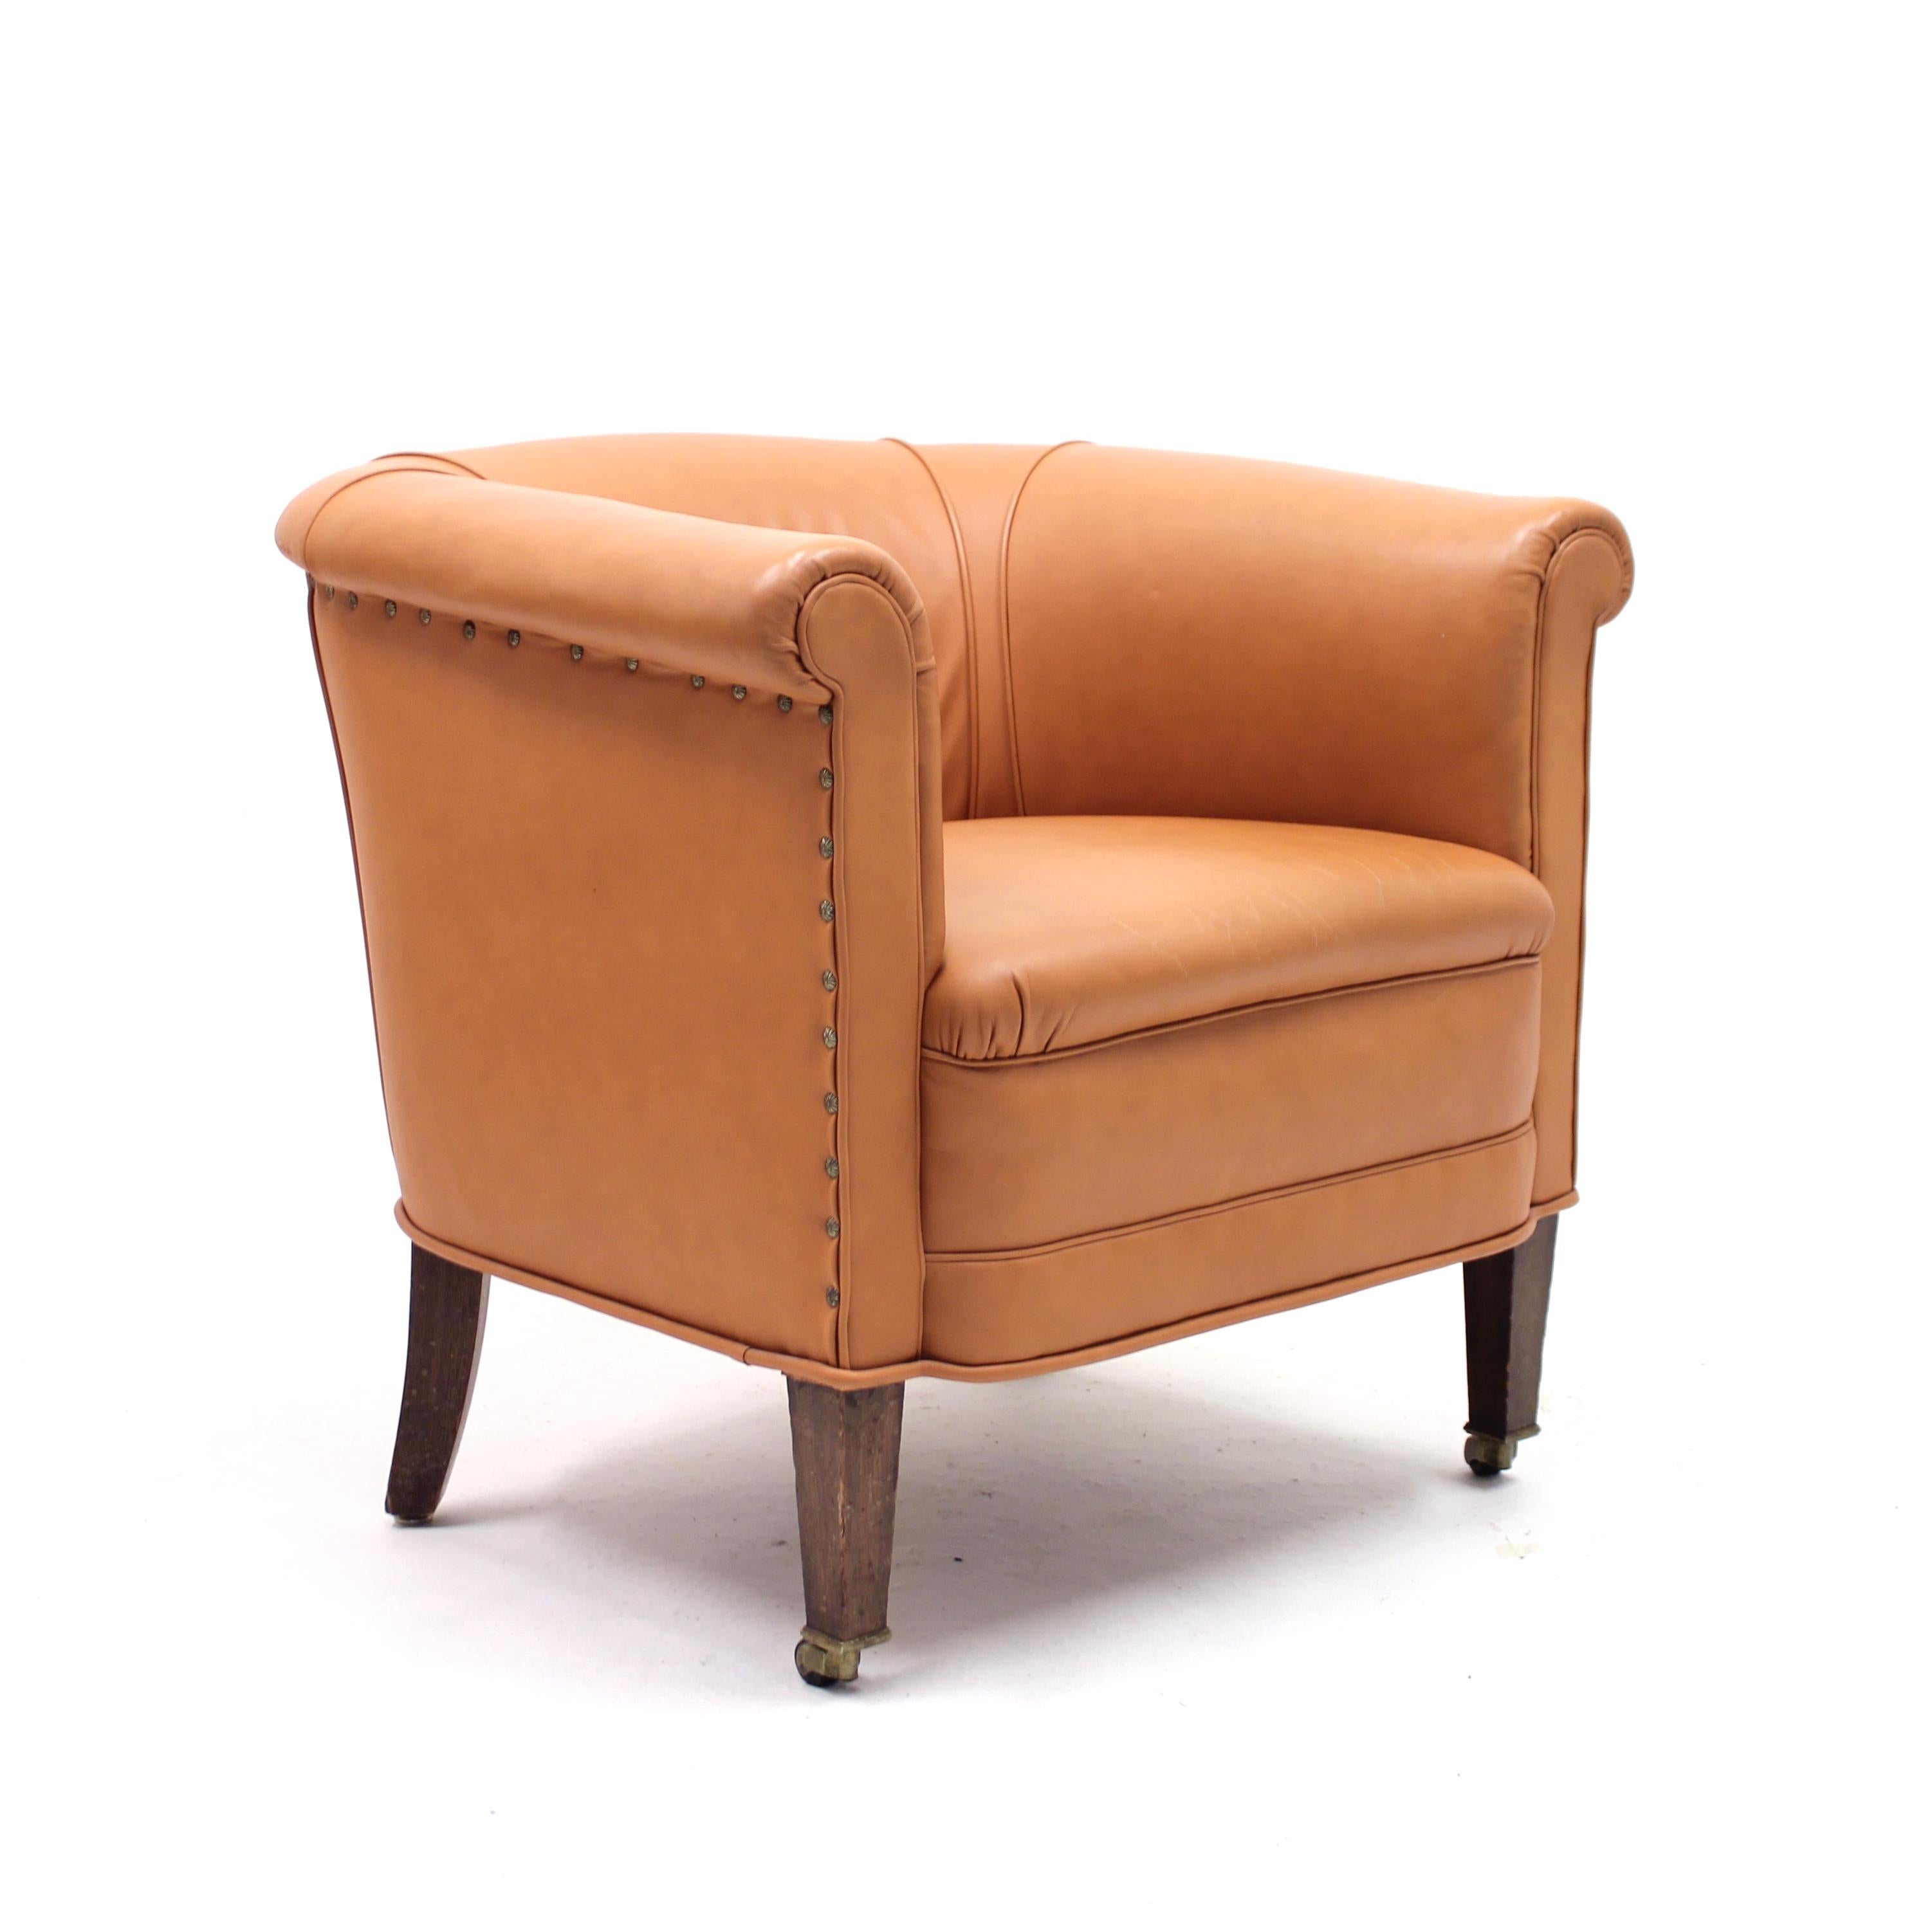 Art Deco Brown Leather Club Chair on Castors, 1930s